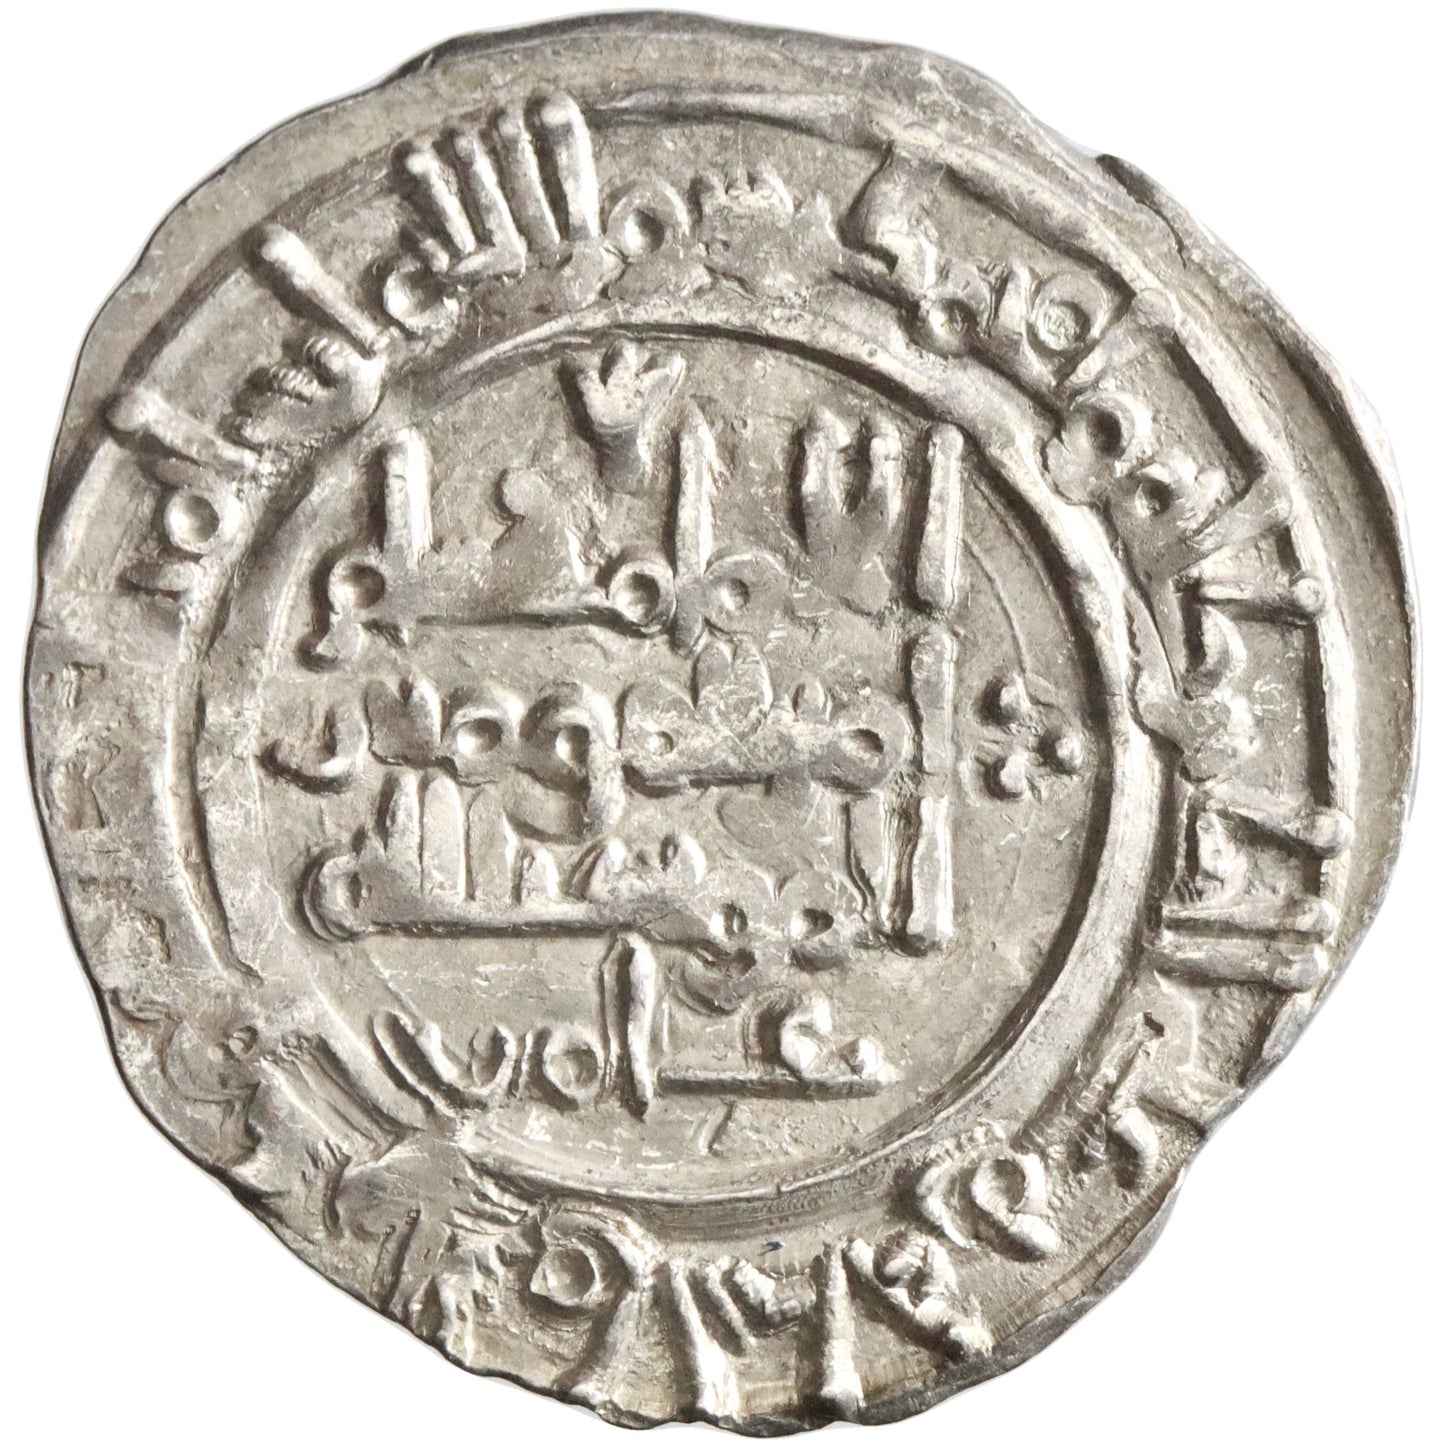 Umayyad of Spain, Hisham II, silver dirham, al-Andalus (Spain) mint, AH 381, citing 'Amir